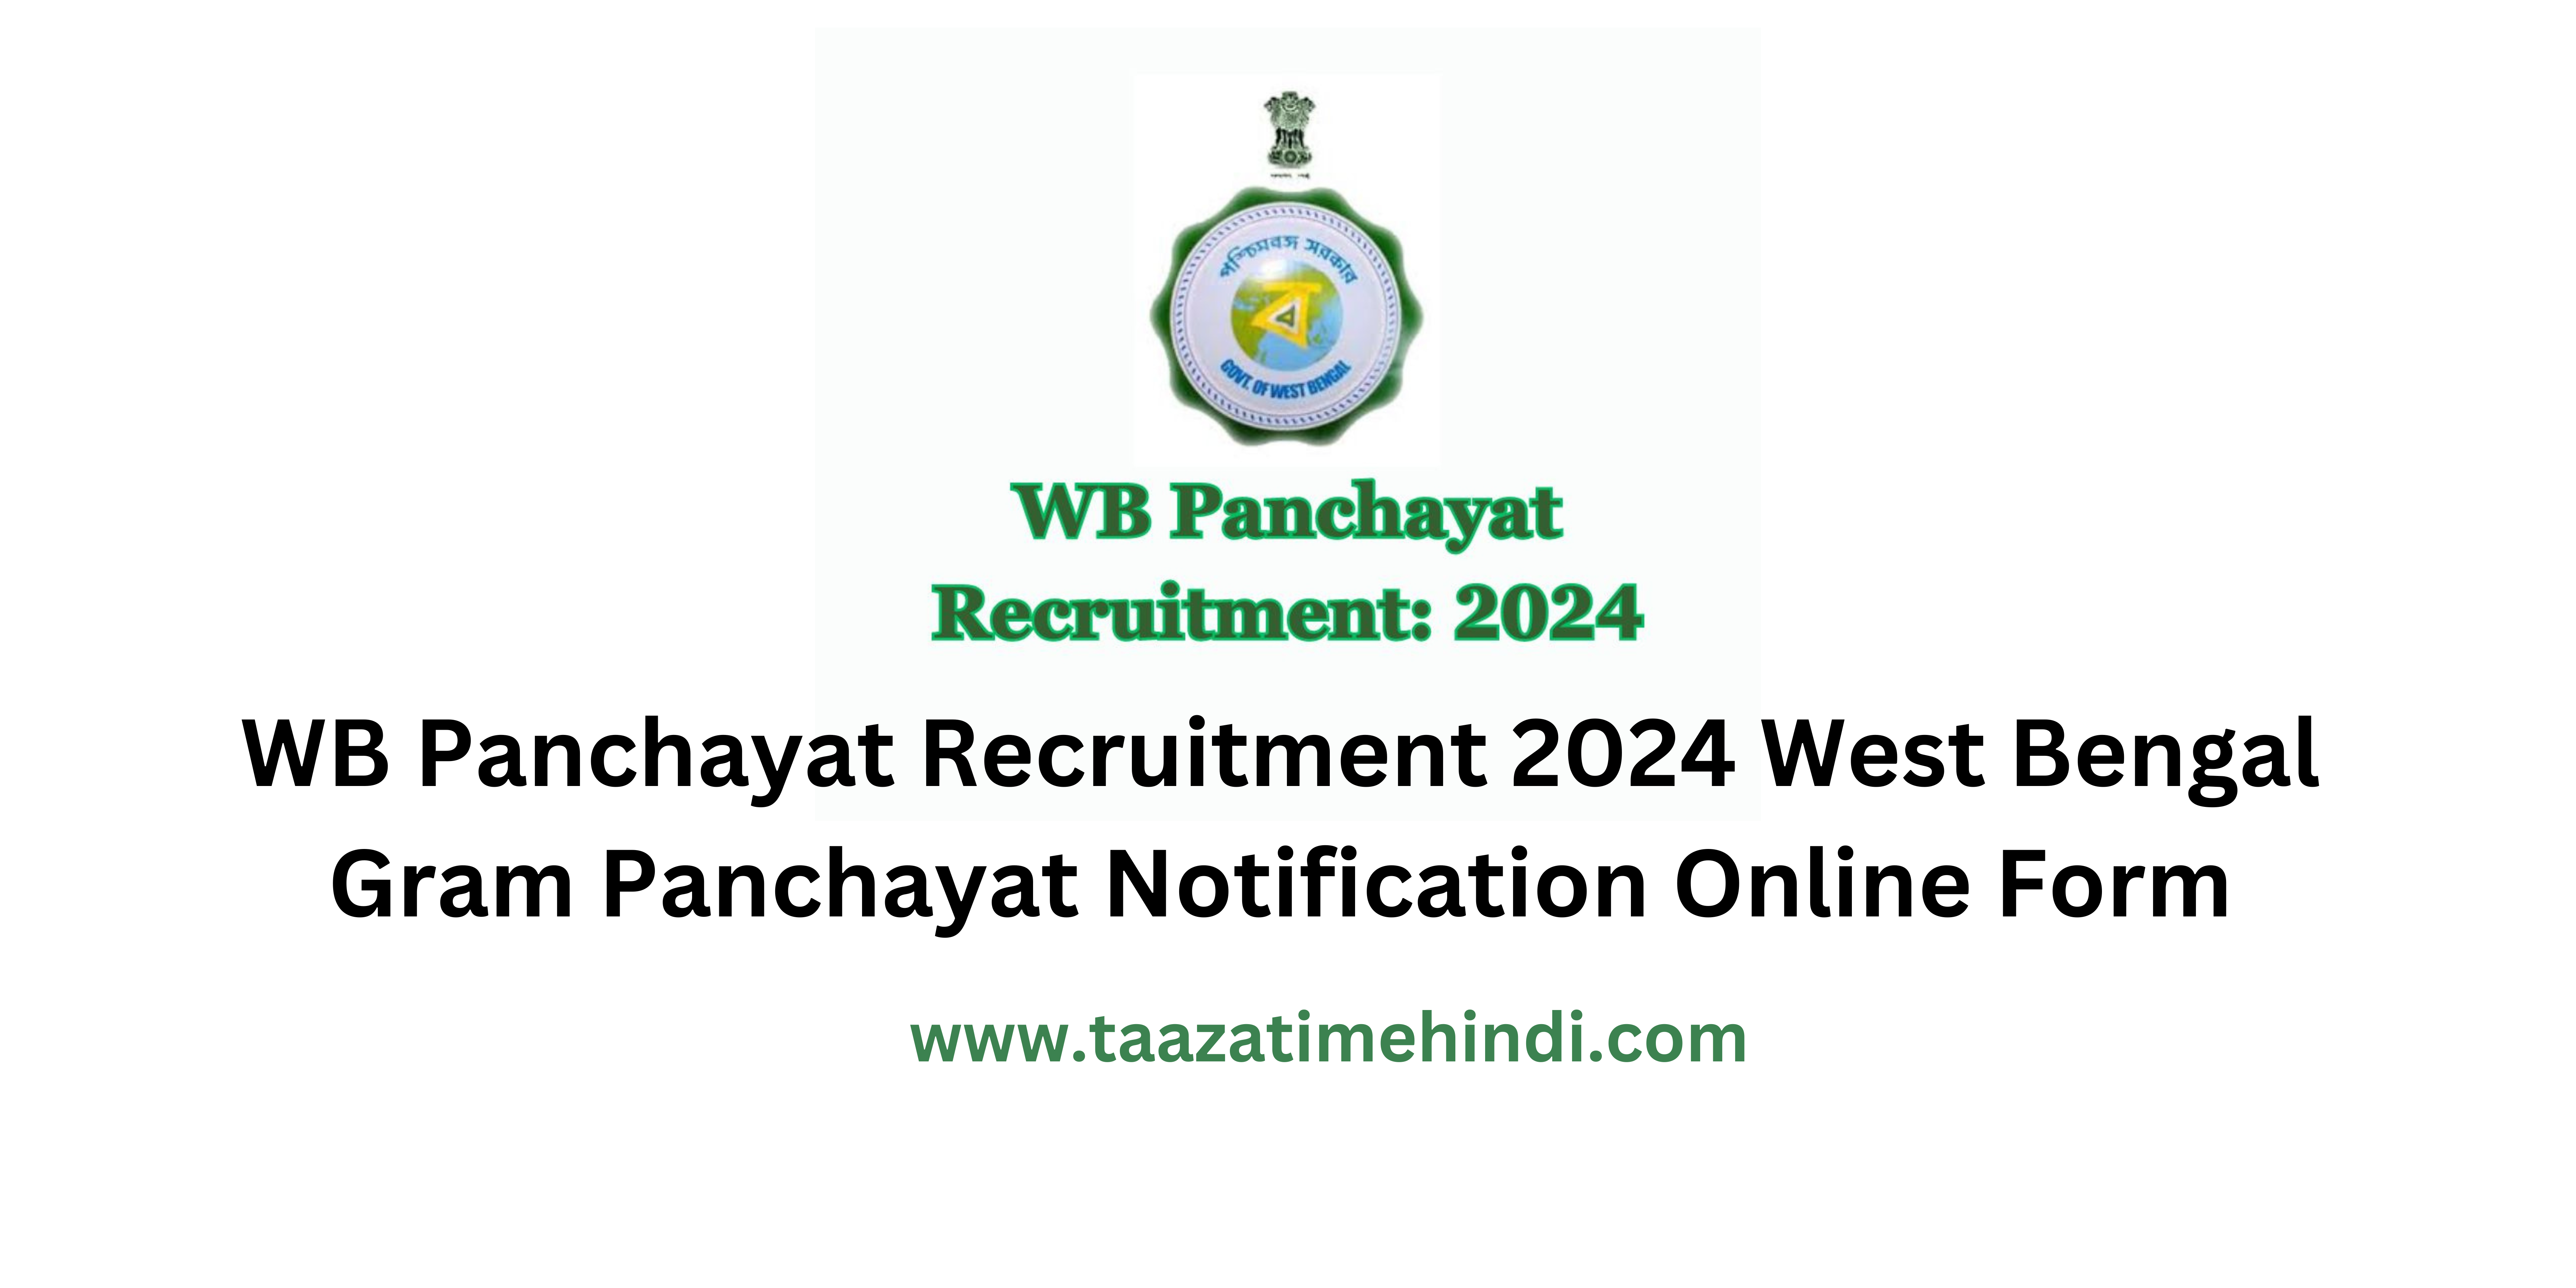 WB Panchayat Recruitment 2024 West Bengal Gram Panchayat Notification Online Form taazatimehindi